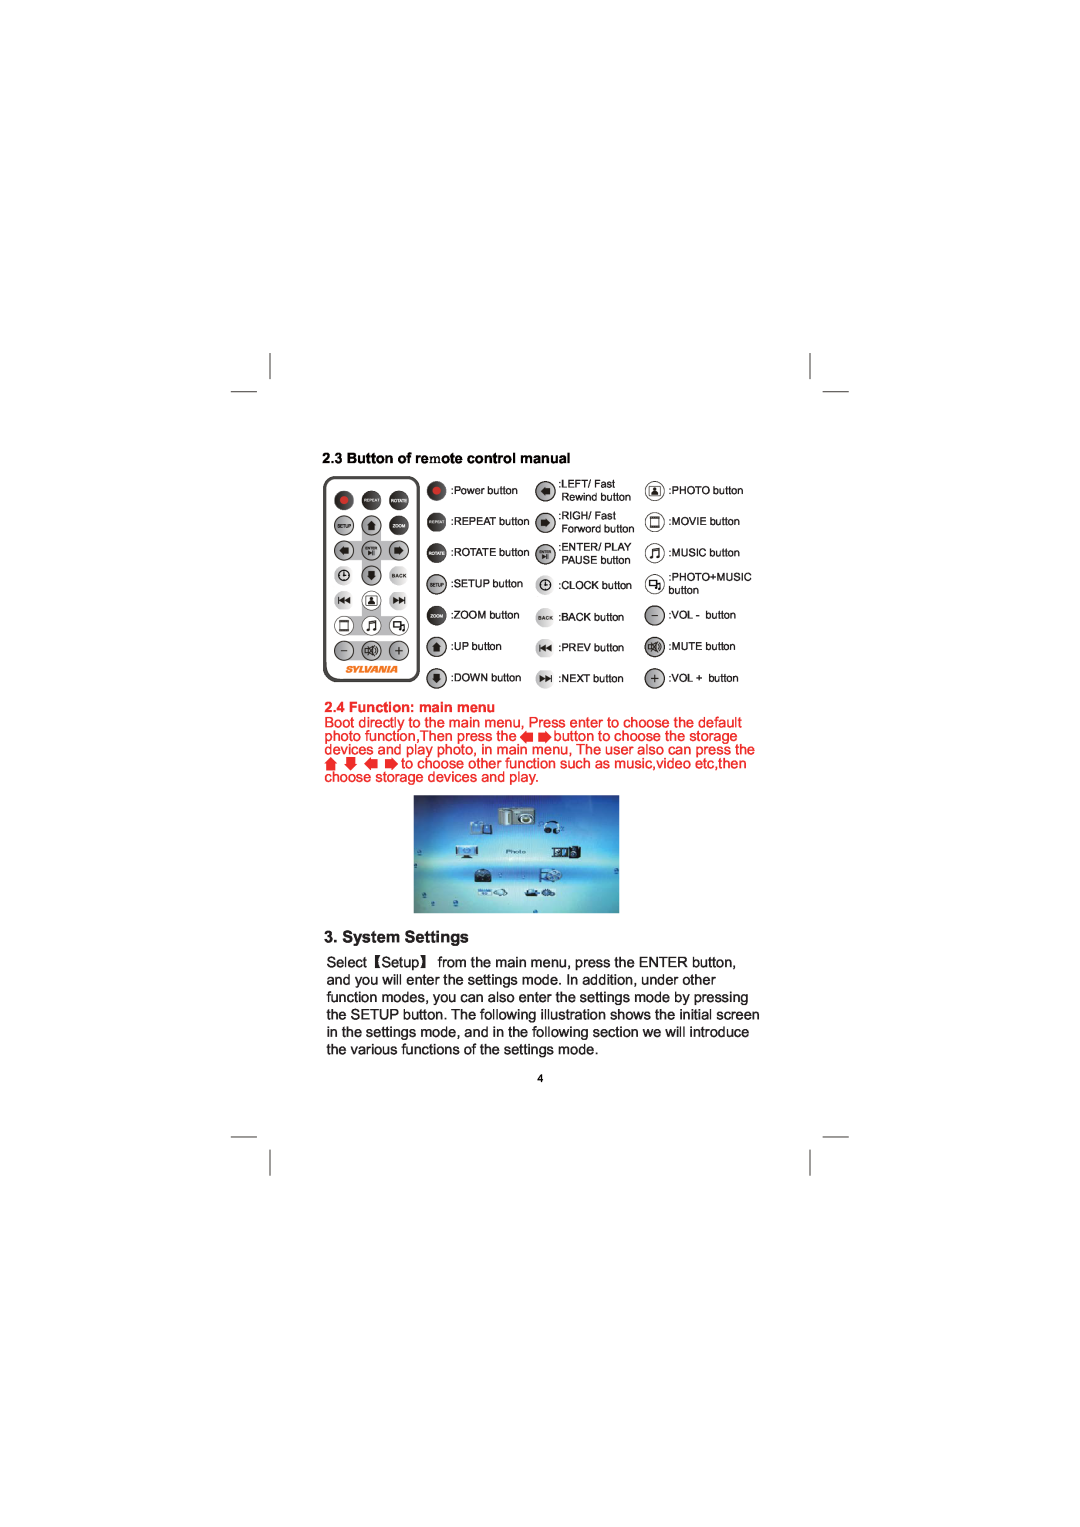 Sylvania SDPF1033 user manual System Settings, Button of remote control manual, Function main menu 